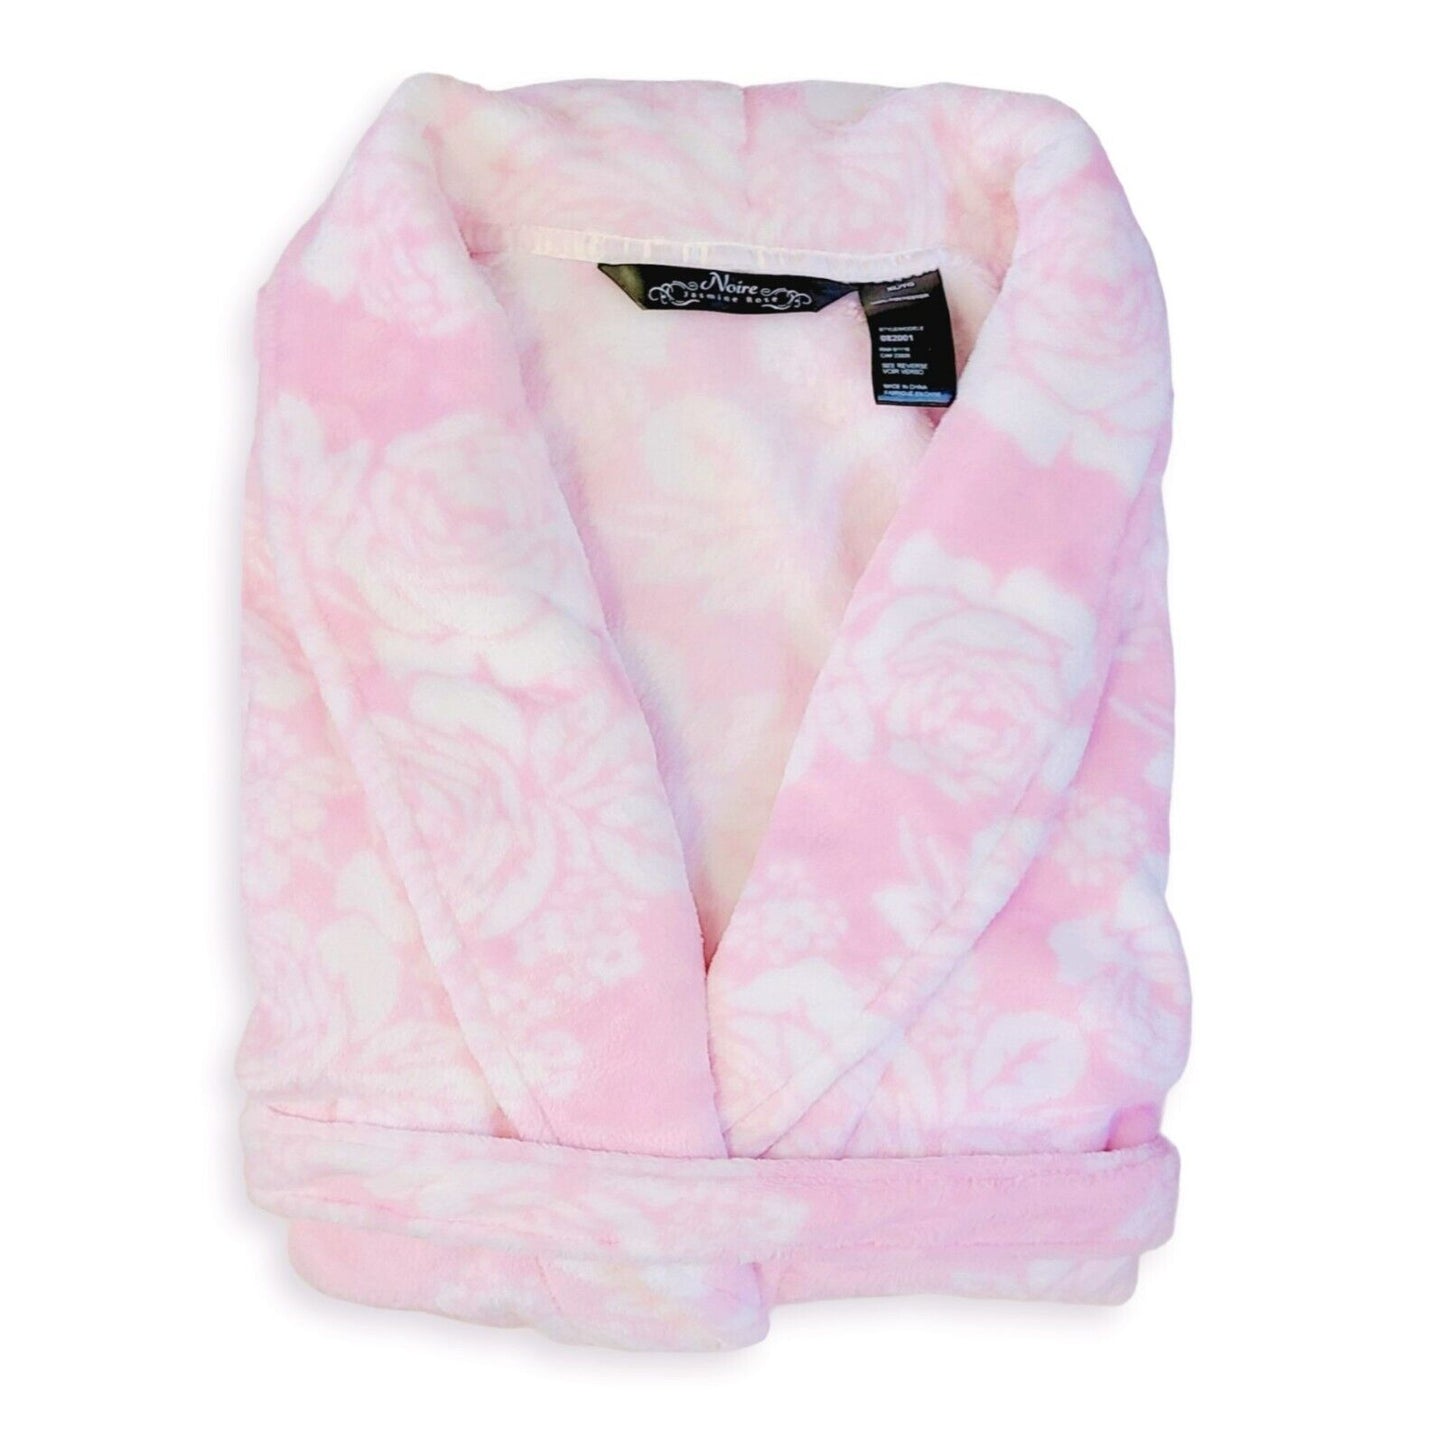 NOIRE JASMINE ROSE Floral Print Ultra-Soft Plush Robe